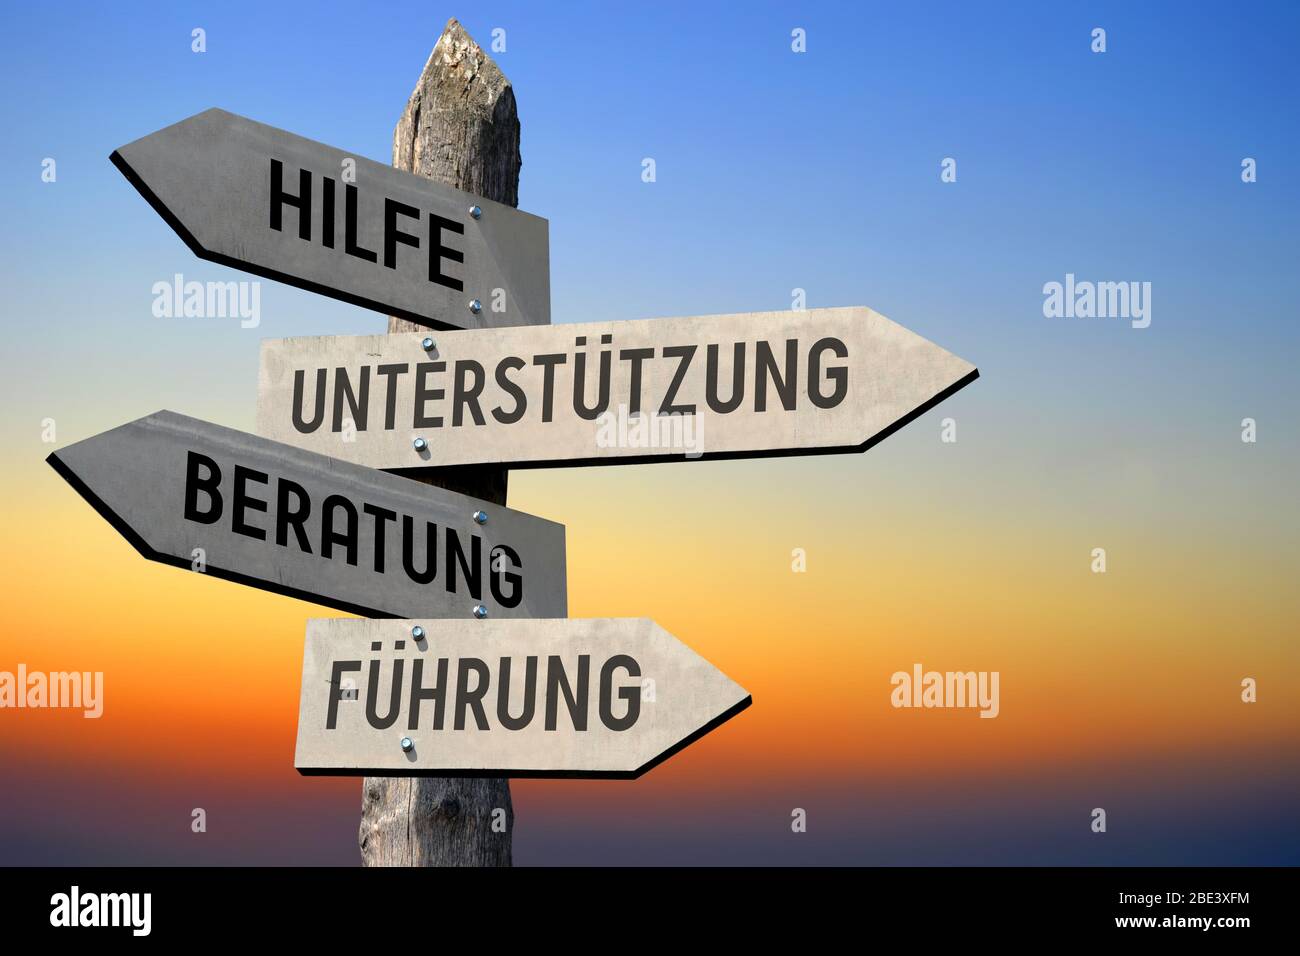 Hilfe, UNTERSTUTZUNG, Beratung, Fuhrung - letrero alemán Foto de stock